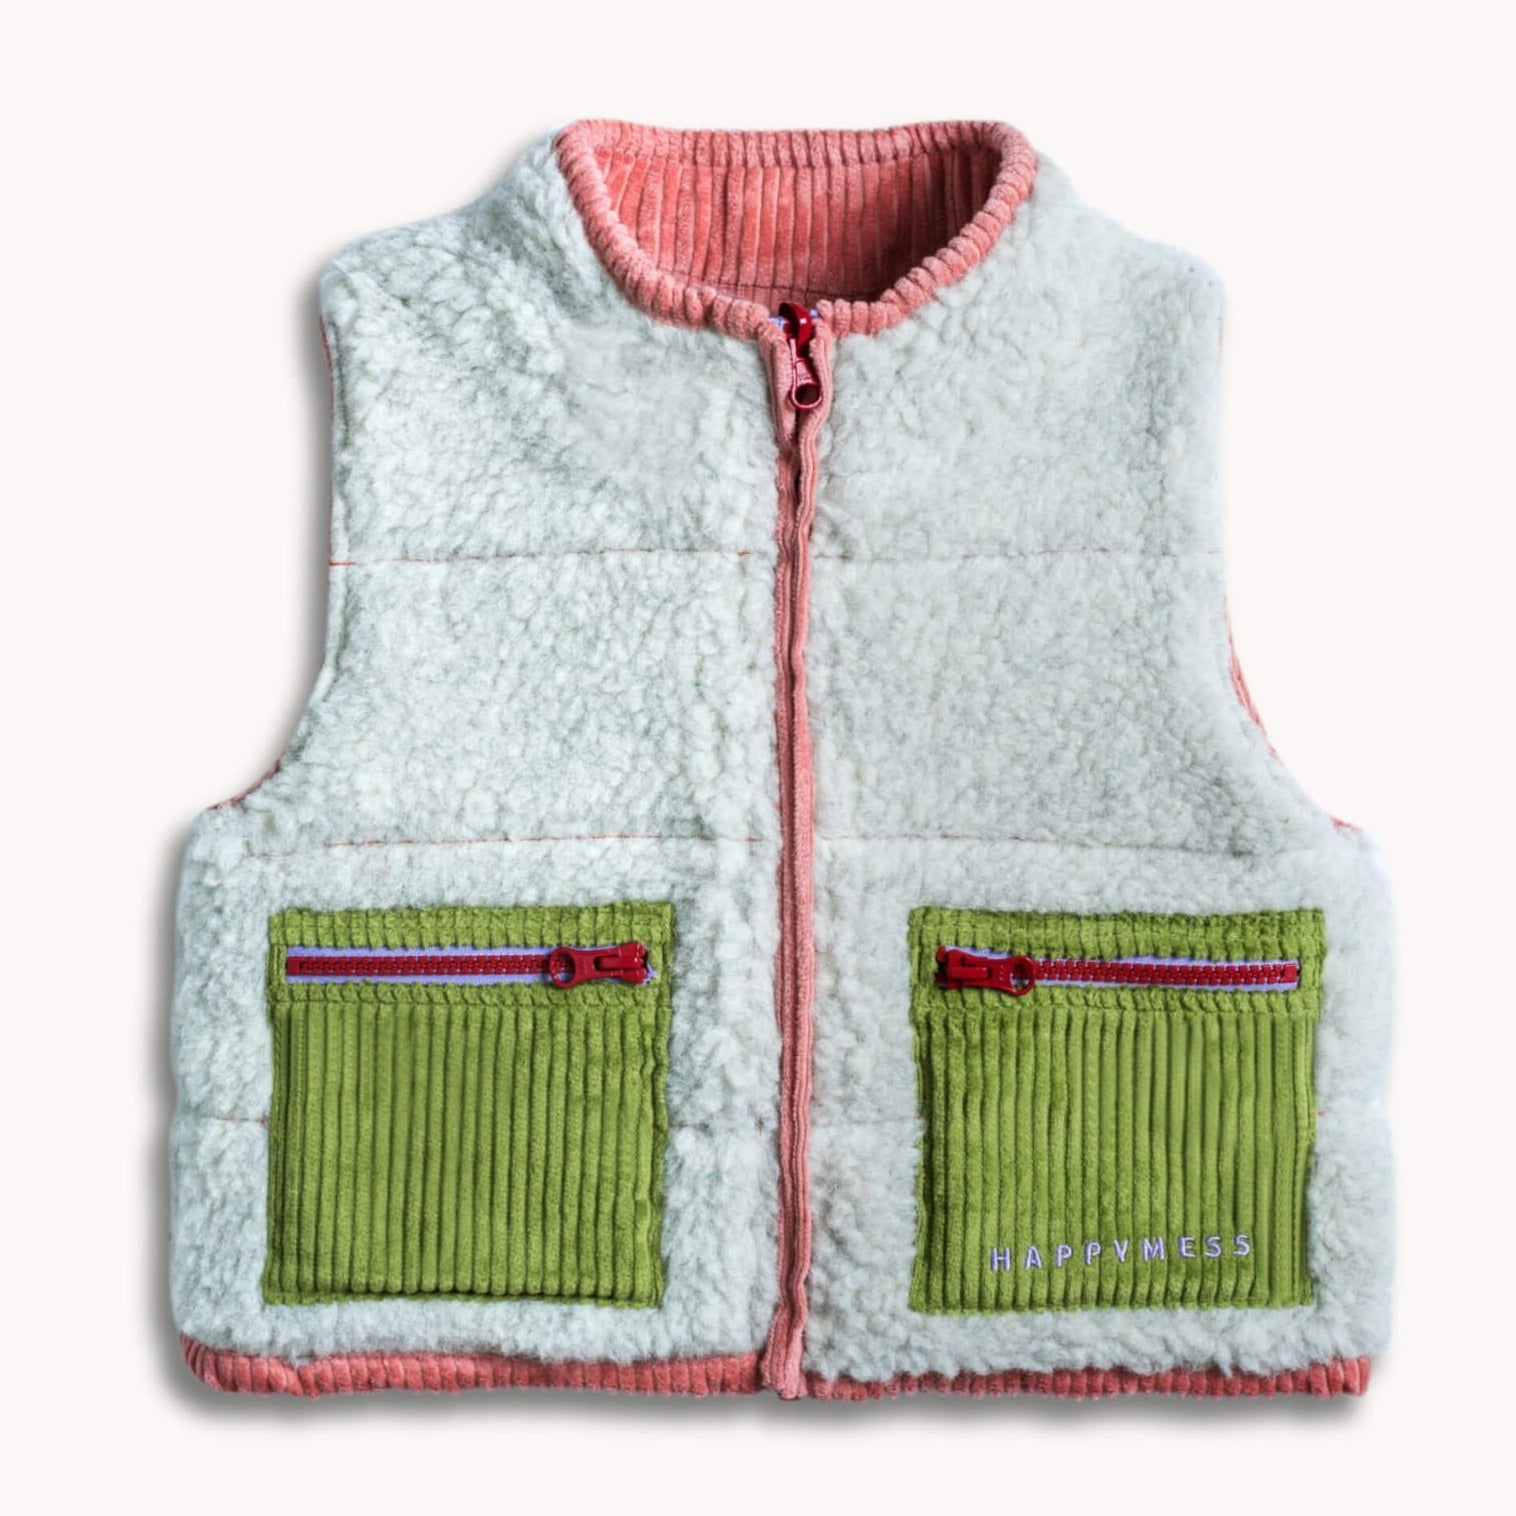 HAPMYSS: Double -sided Merino vest